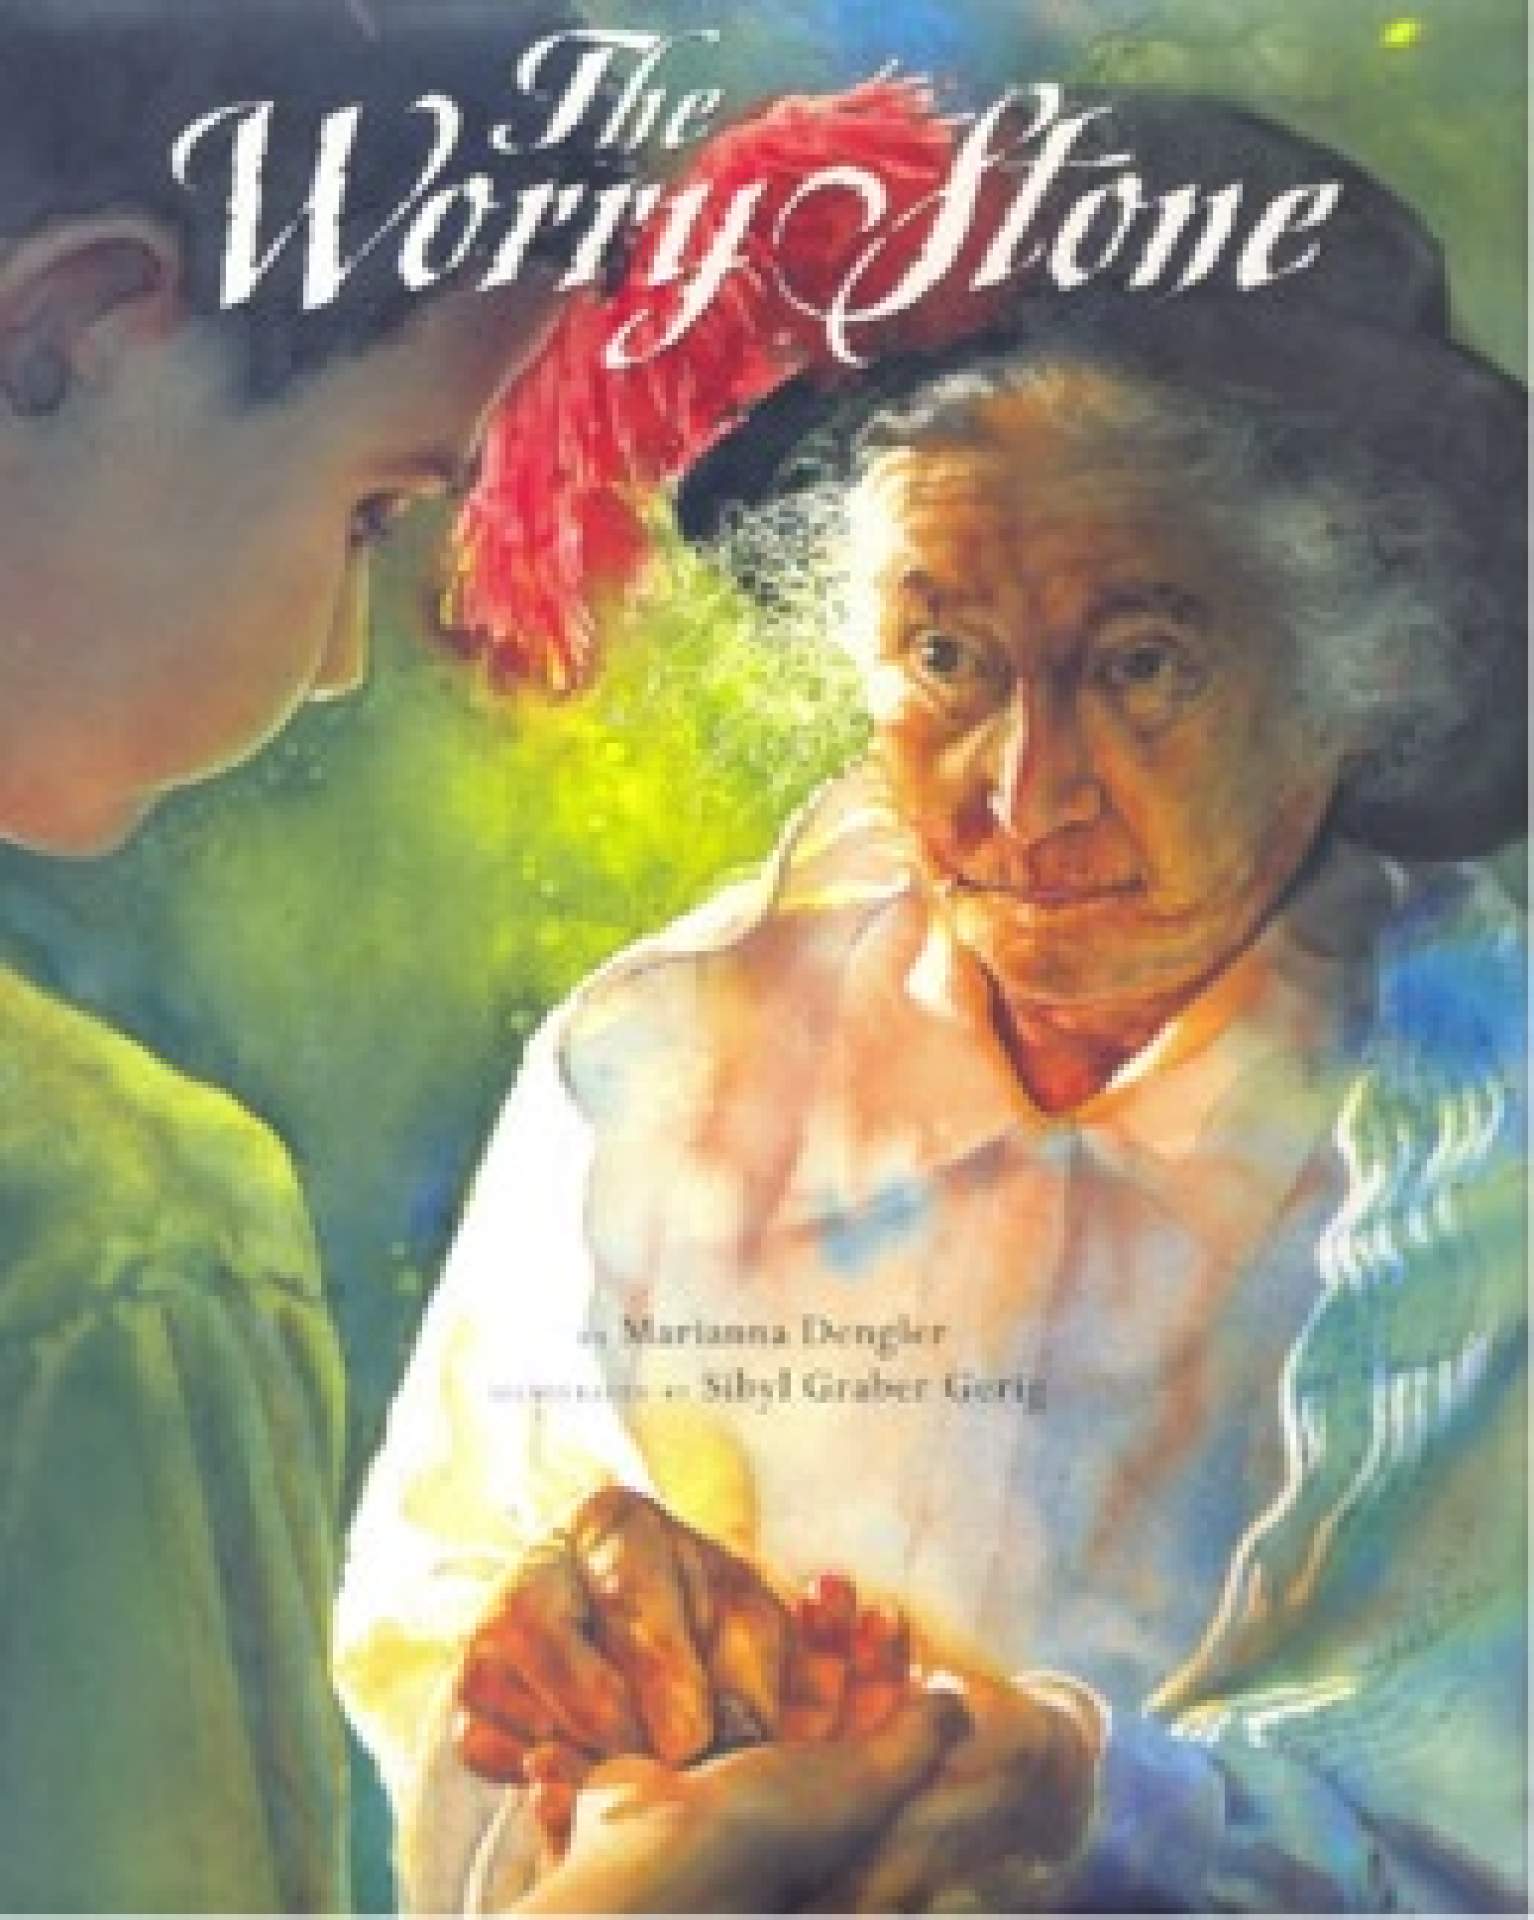 The Worry Stone